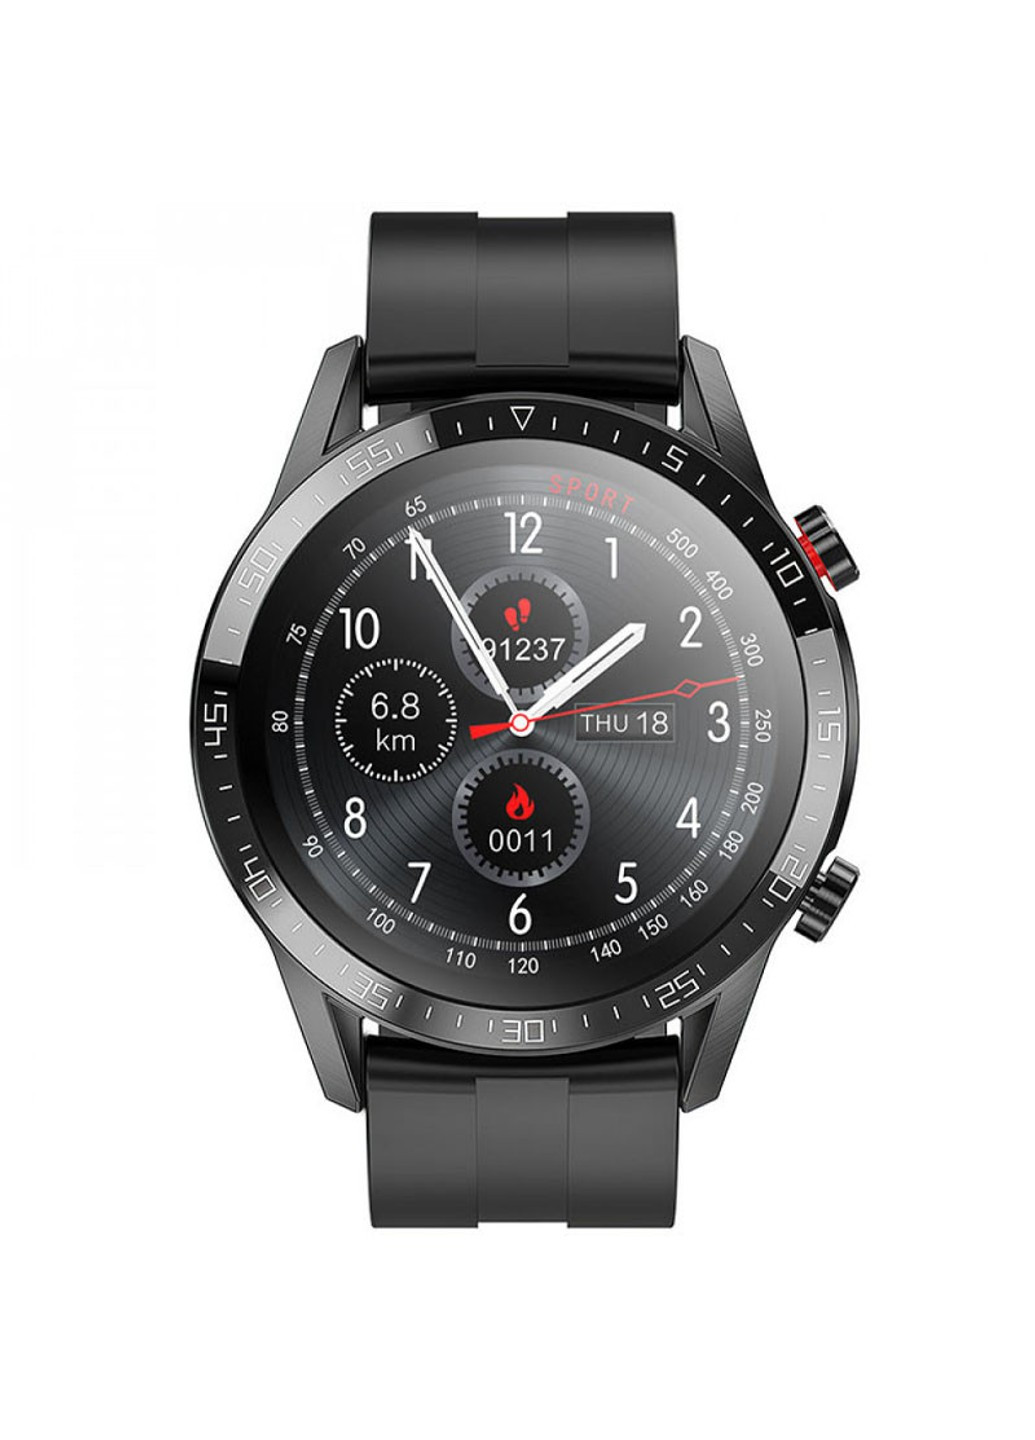 Смарт-часы Hoco smart watch y2 pro (call version) (261335267)